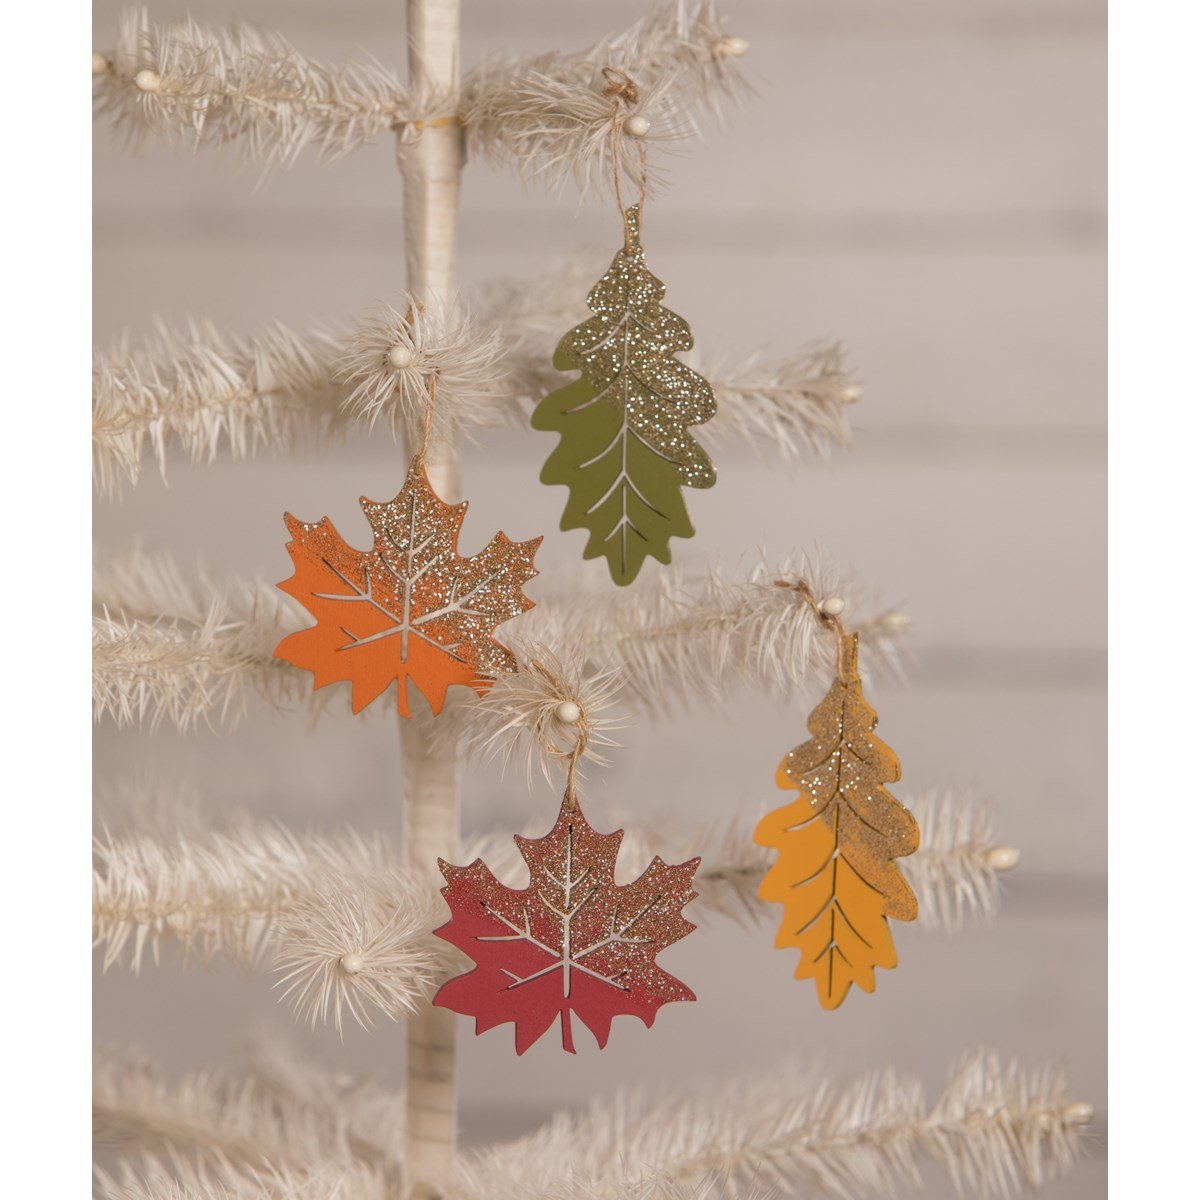 Fall Harvest Leaf Ornaments Set/4